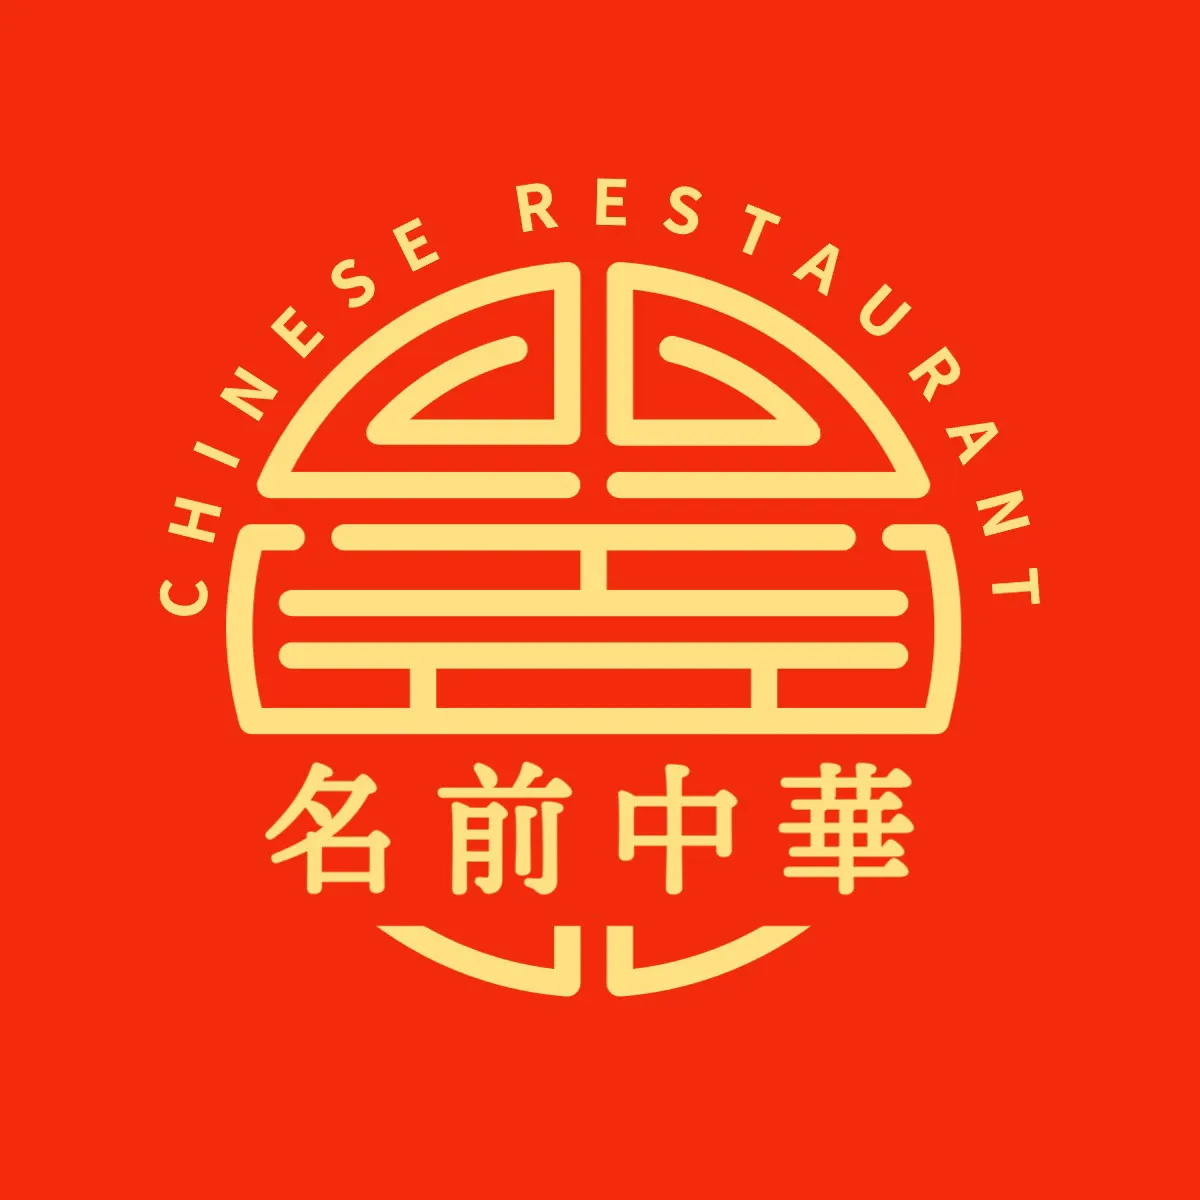 Chinese restaurant circle logo